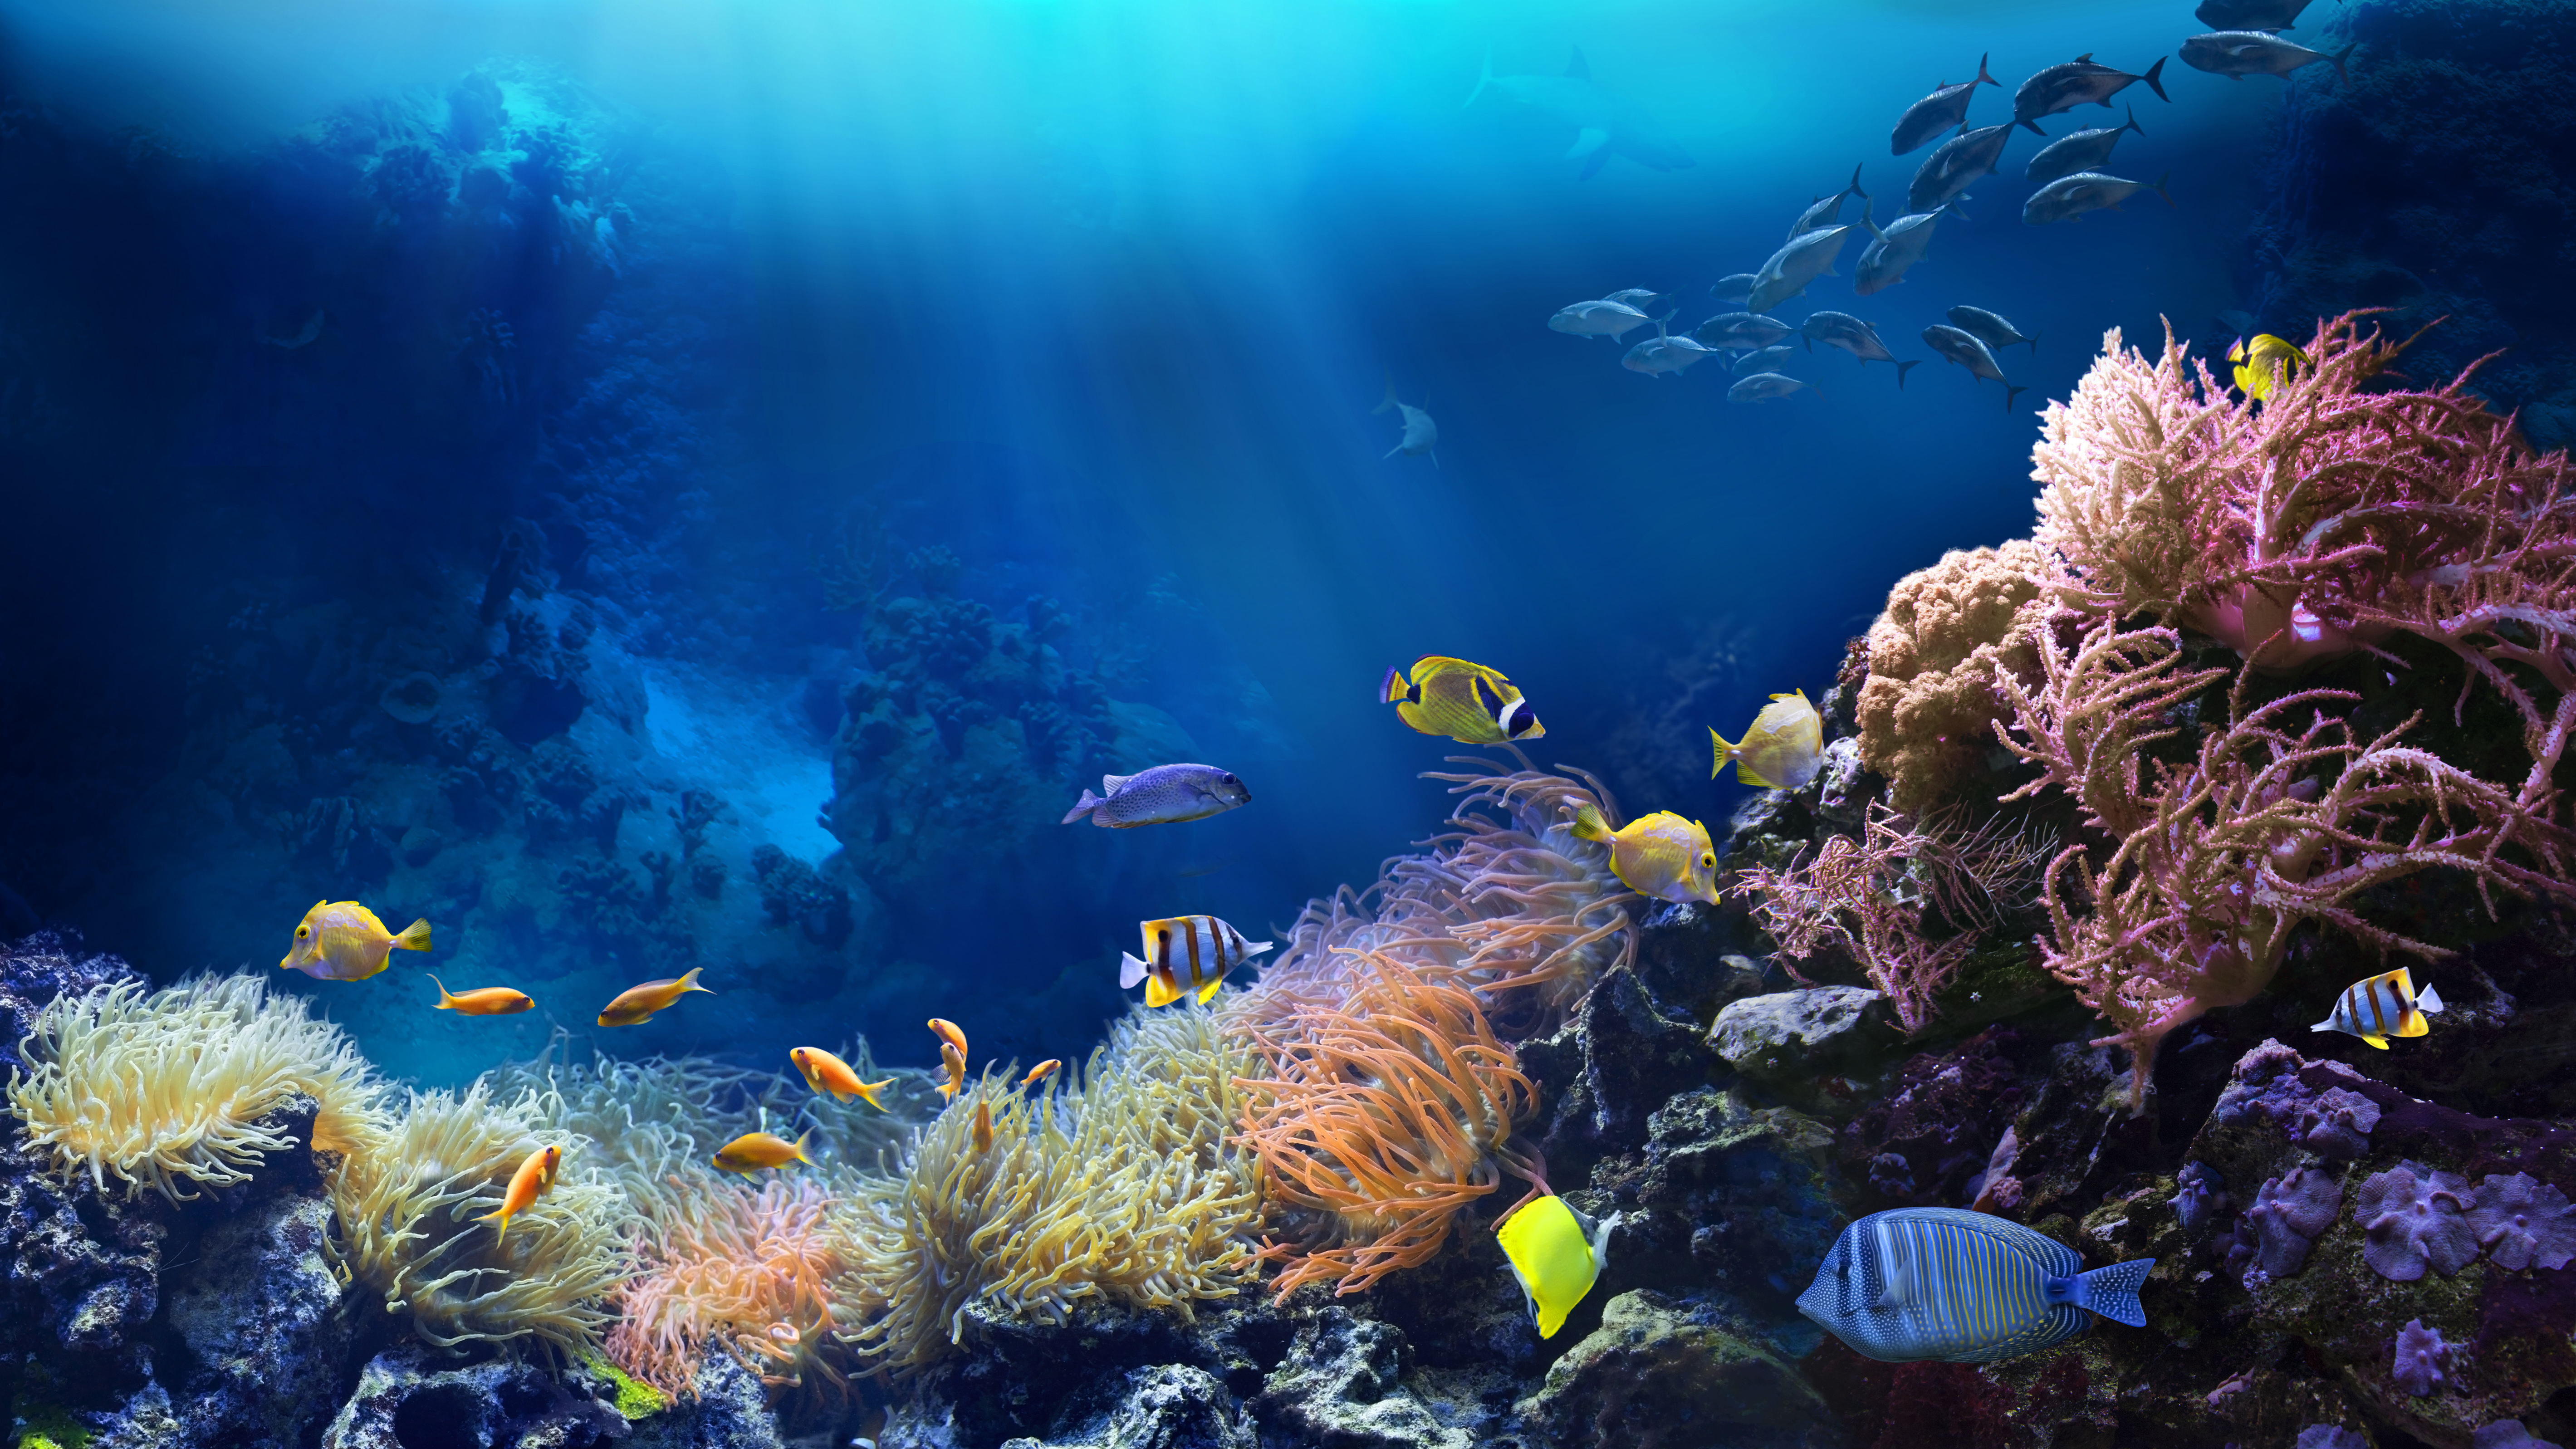 Gardaland SEA LIFE Aquarium - Tank with Fish